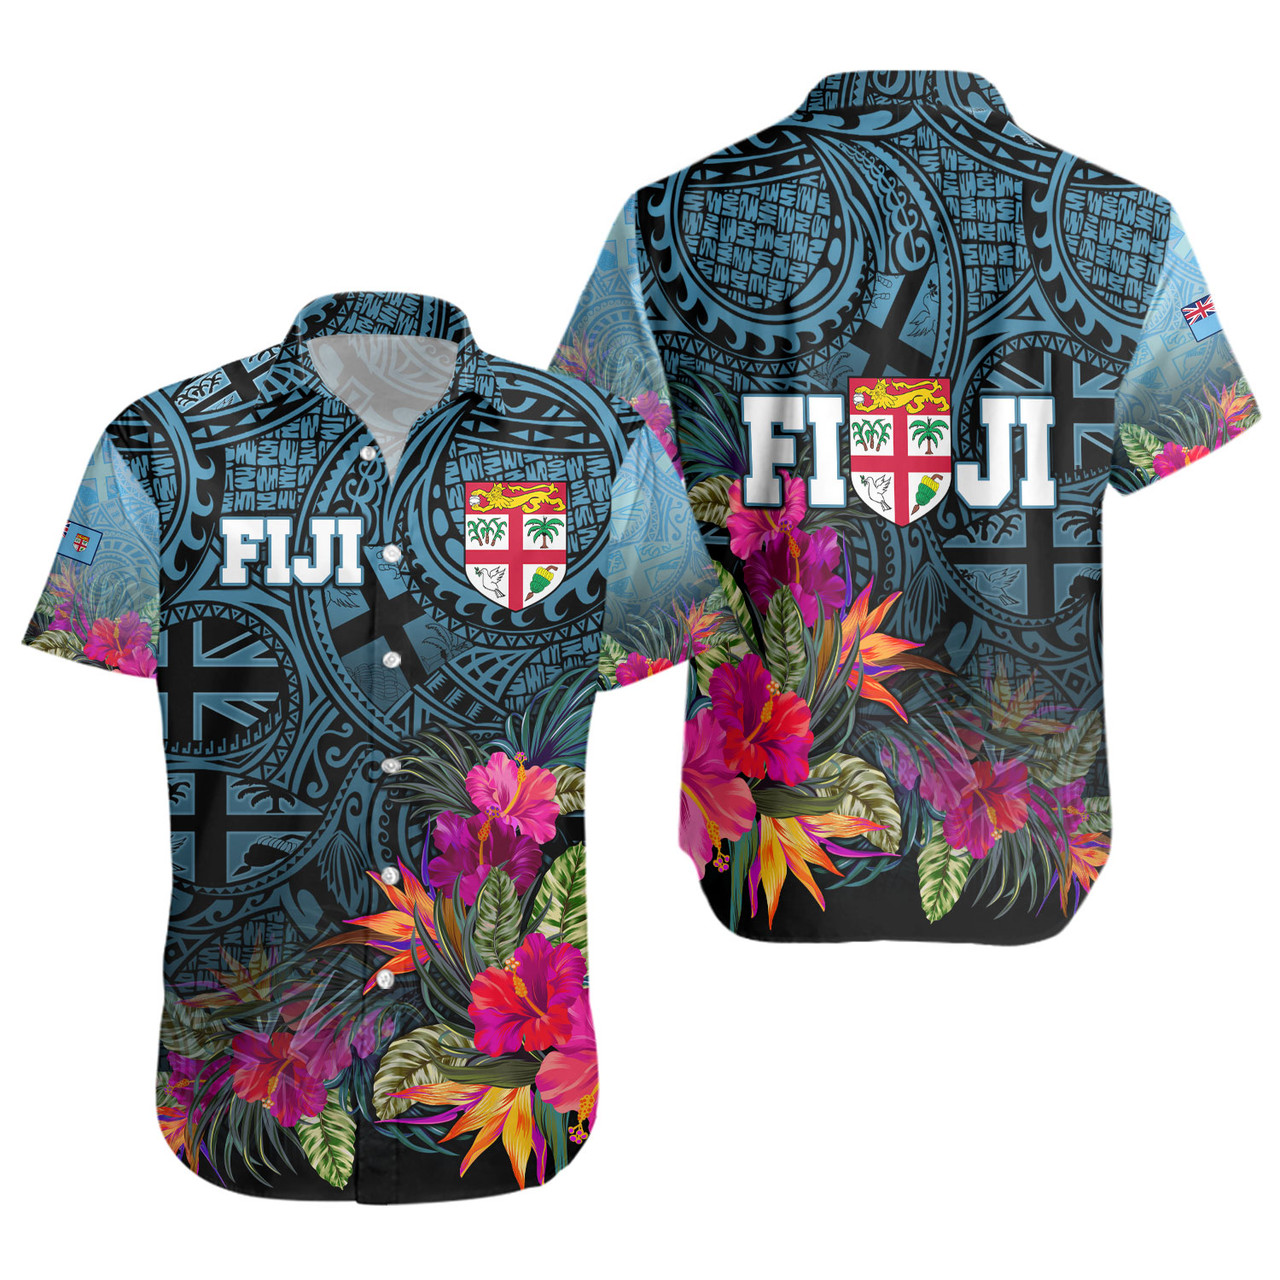 Fiji Short Sleeve Shirt - Fiji Seal With Tapa Patterns Tropical Flowers Design